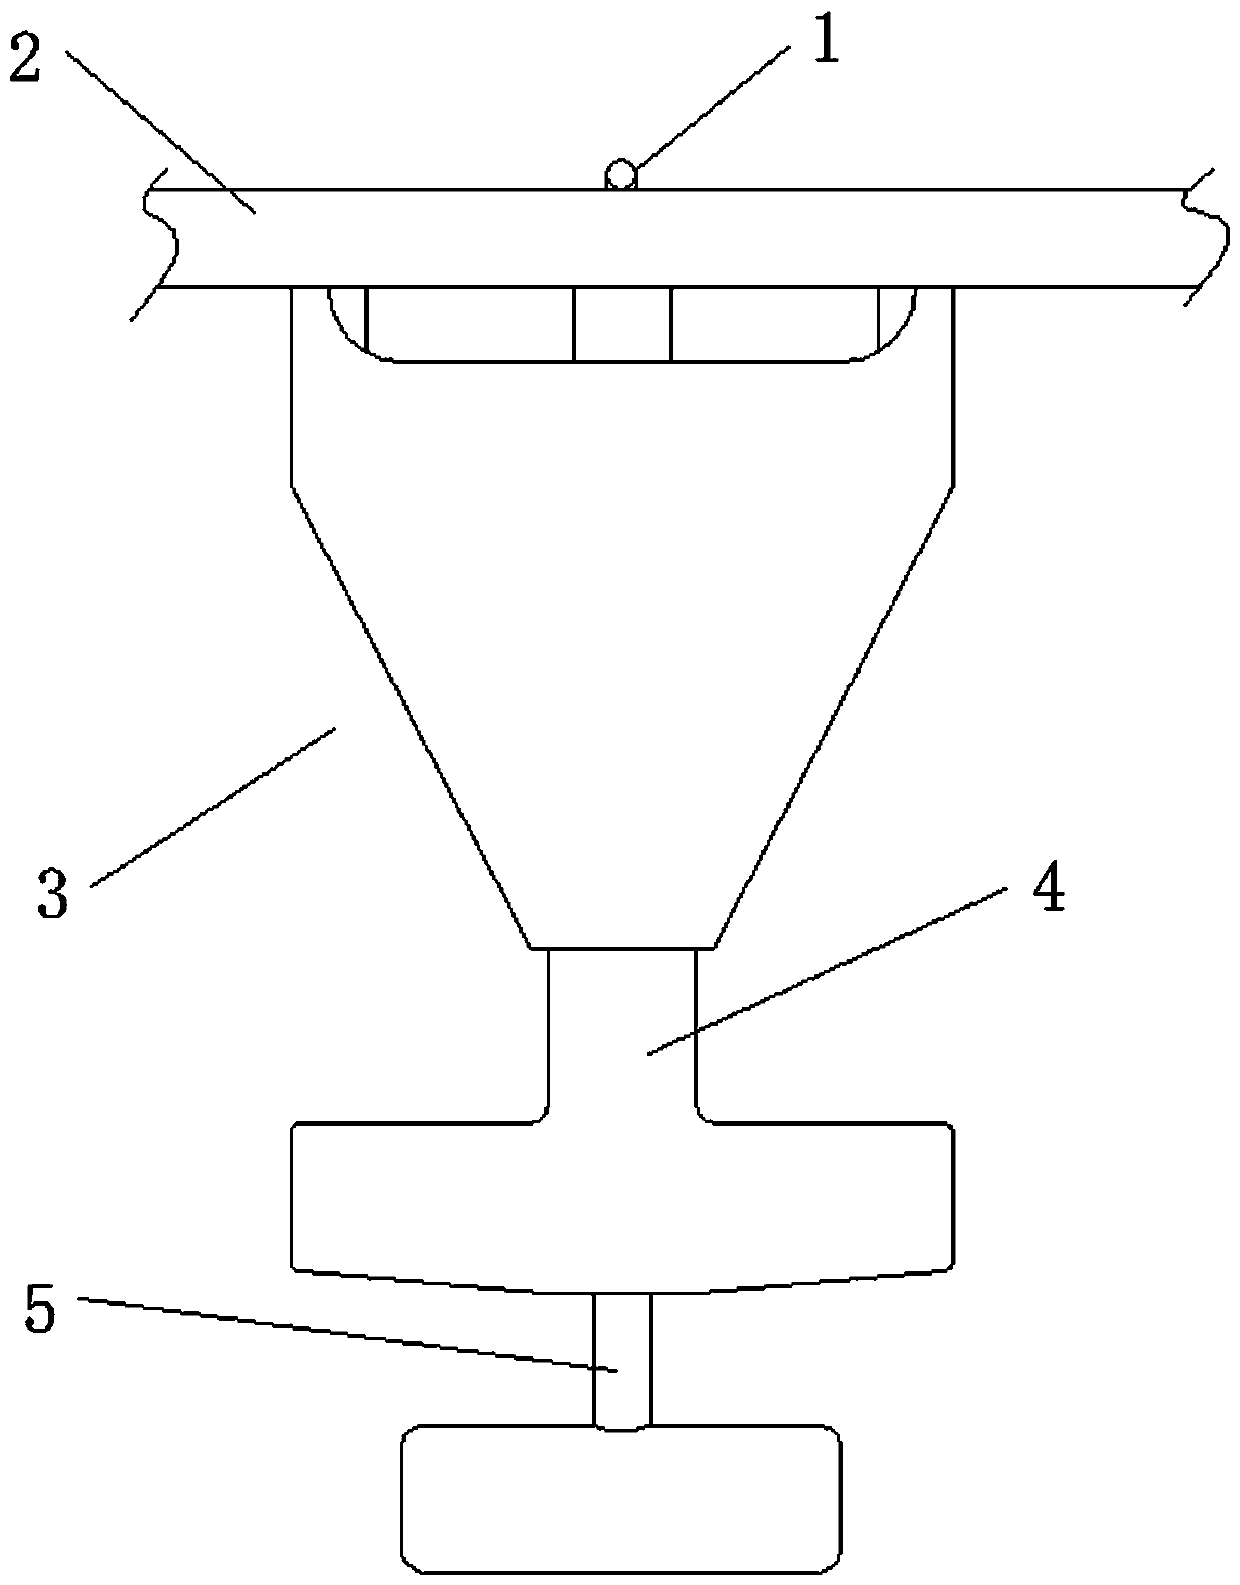 Tensiometer calibration device